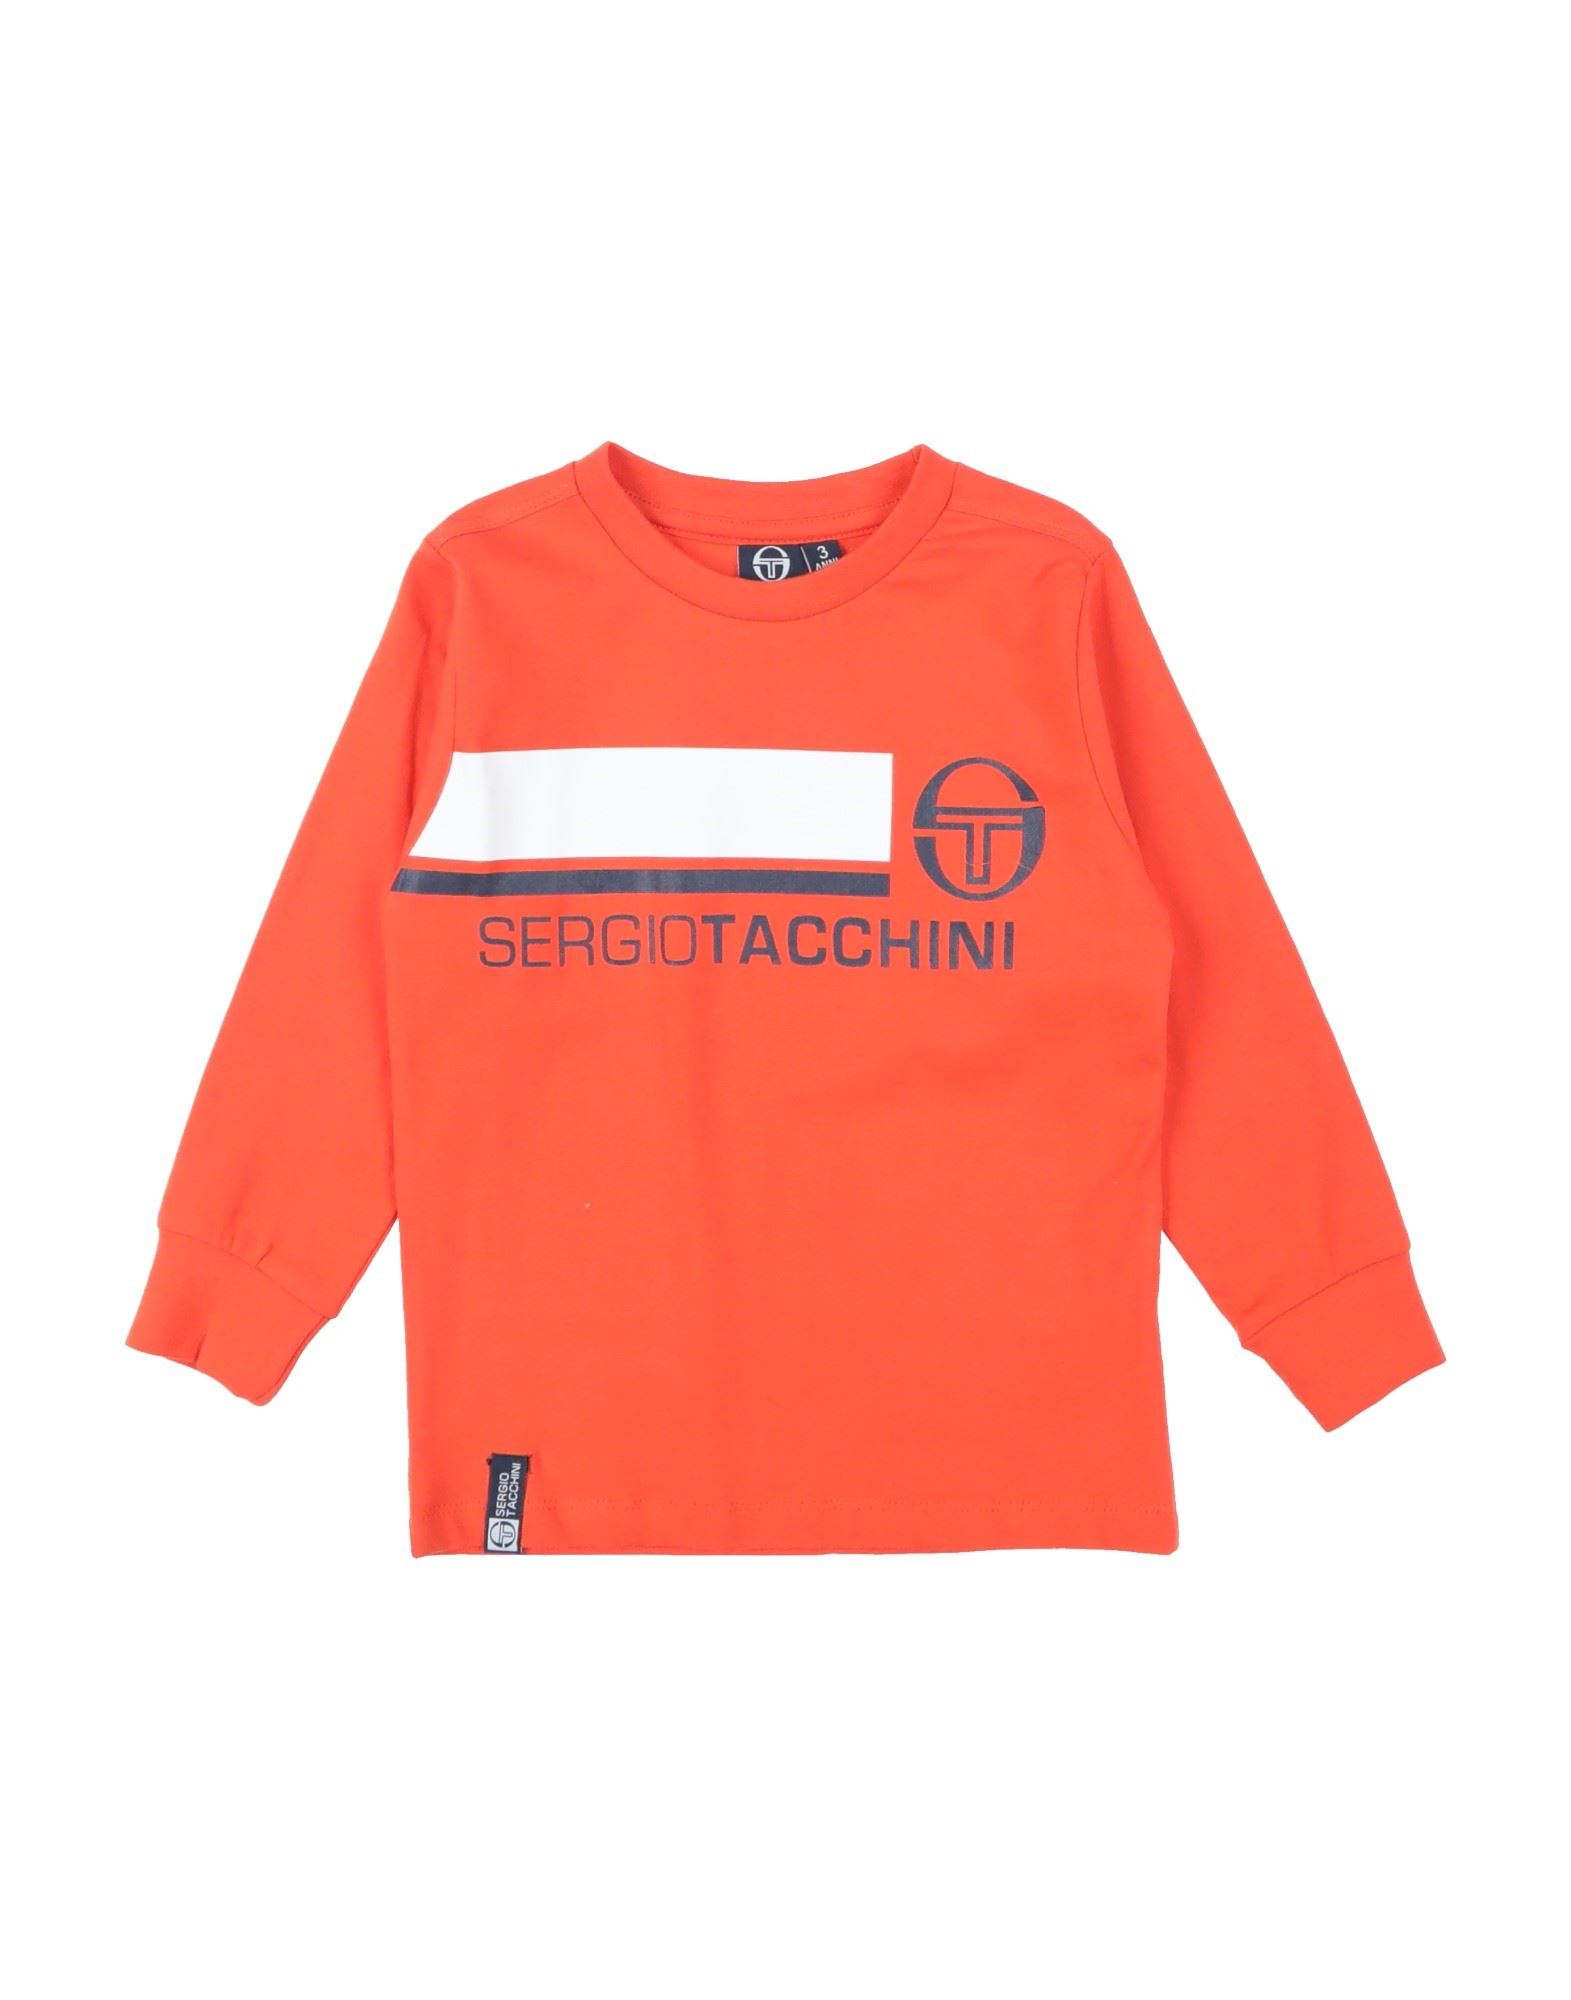 Sergio Tacchini Kids' T-shirts In Orange